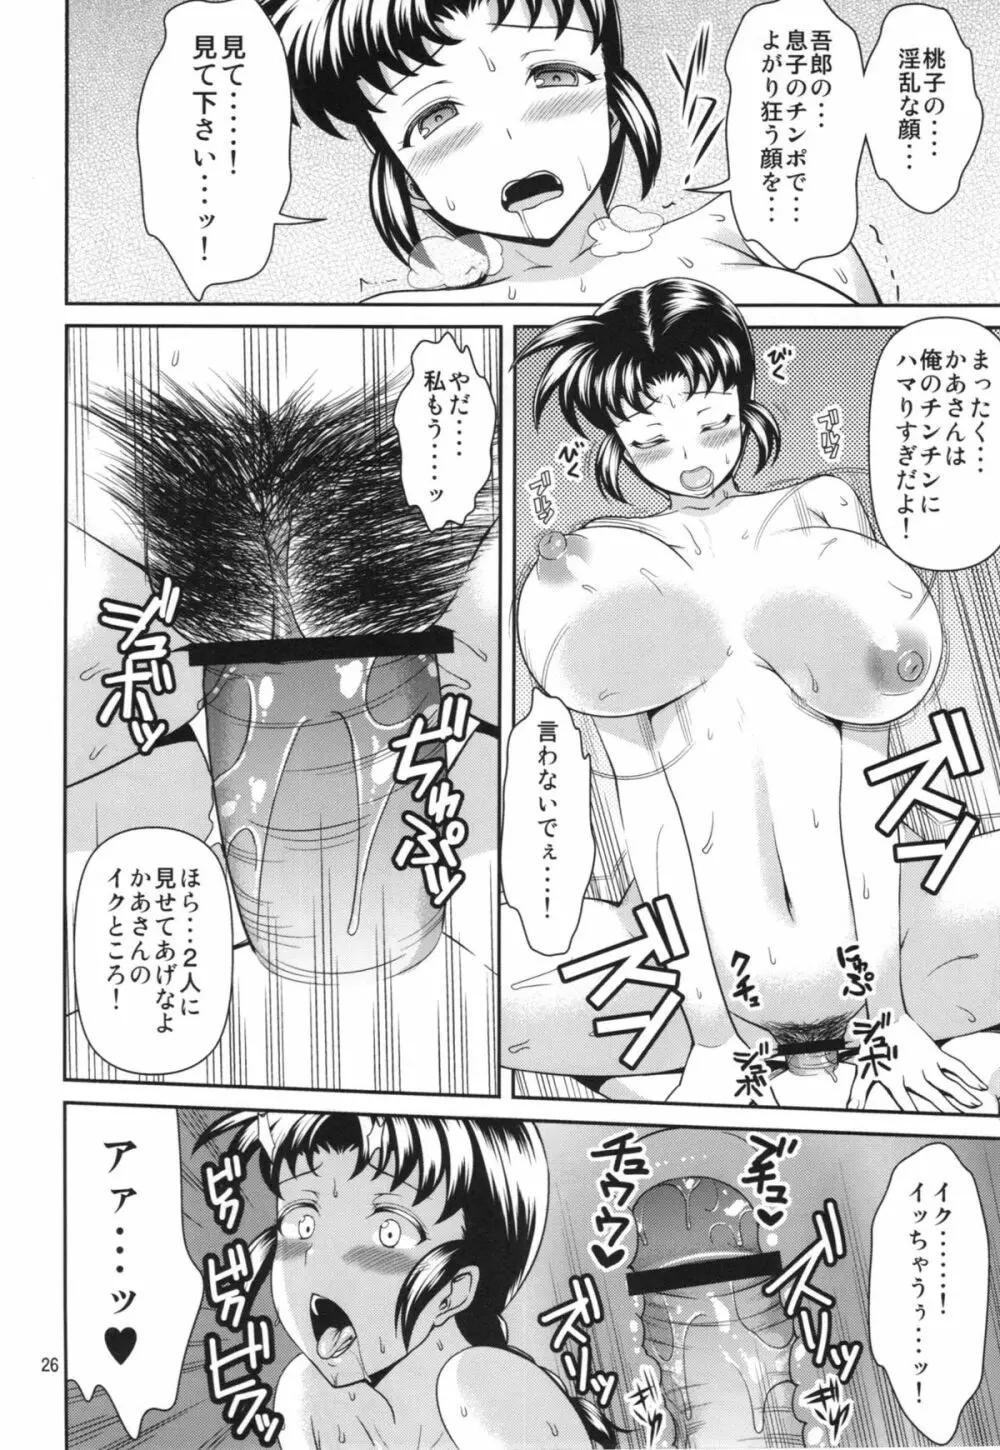 MANIA MOMOKO ~マニア モモコ~ - page26